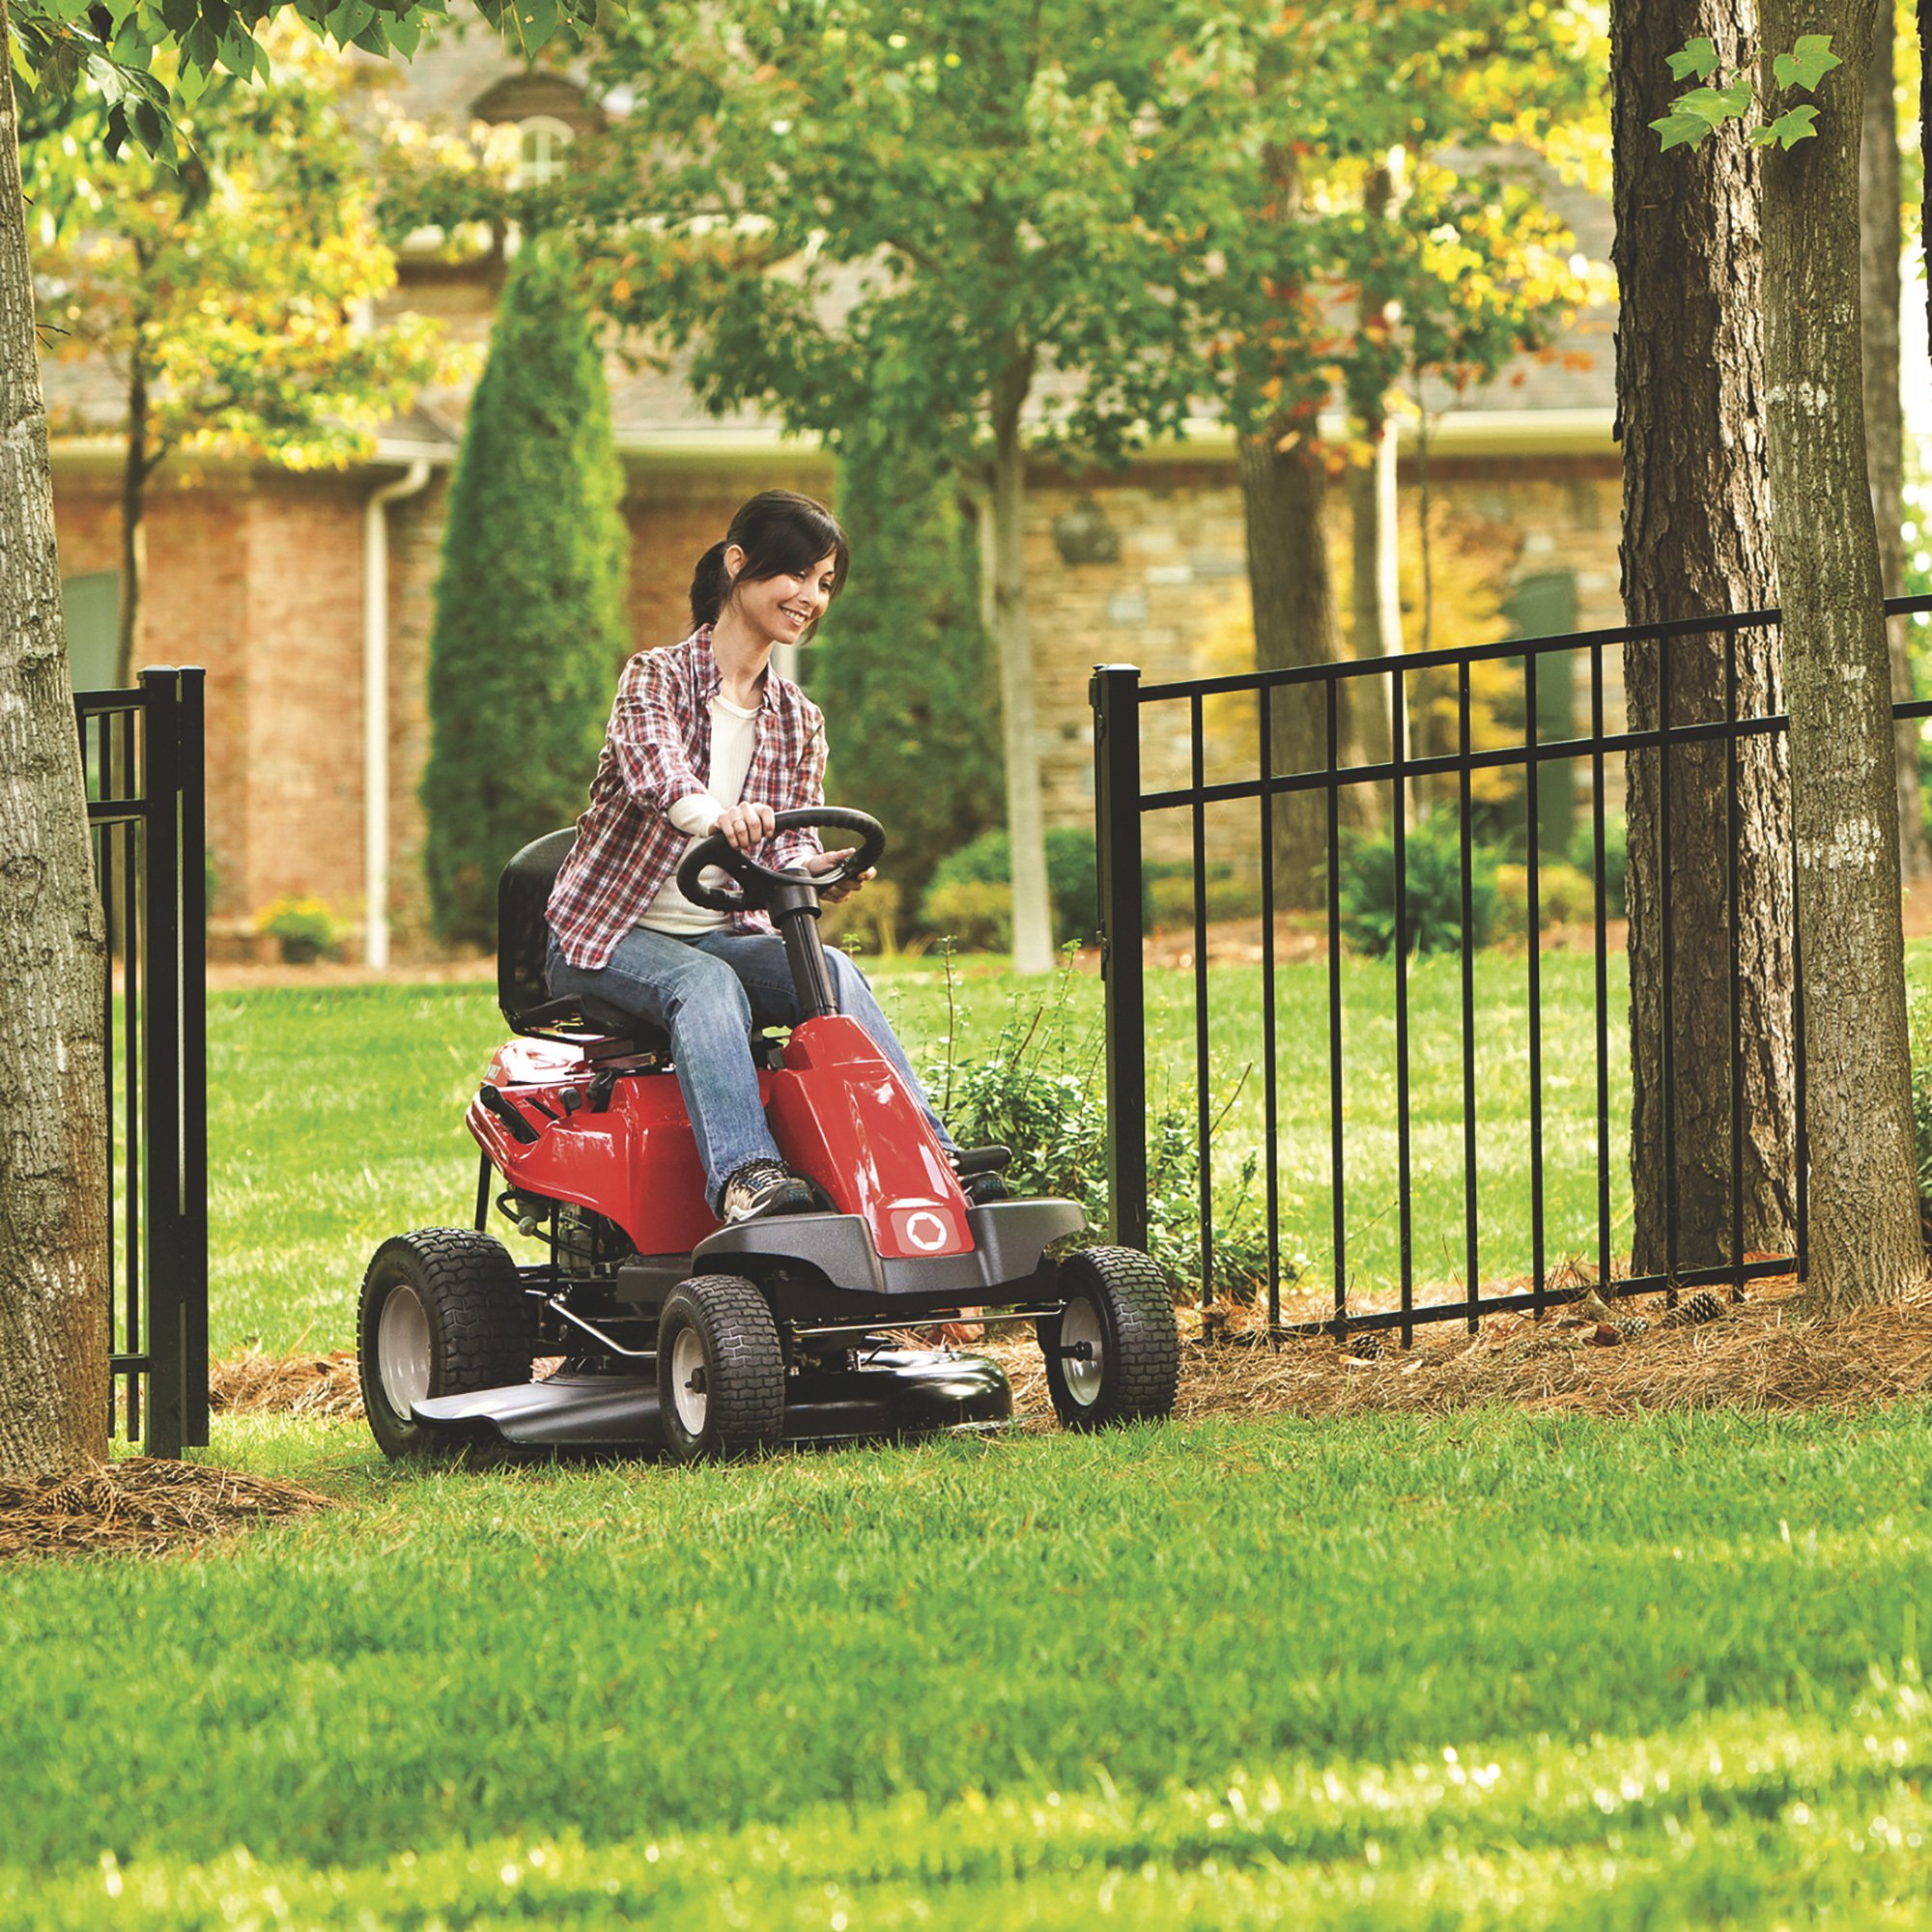 Troy Bilt Neighborhood Rider Riding Lawn Mower — 382cc Troy Bilt